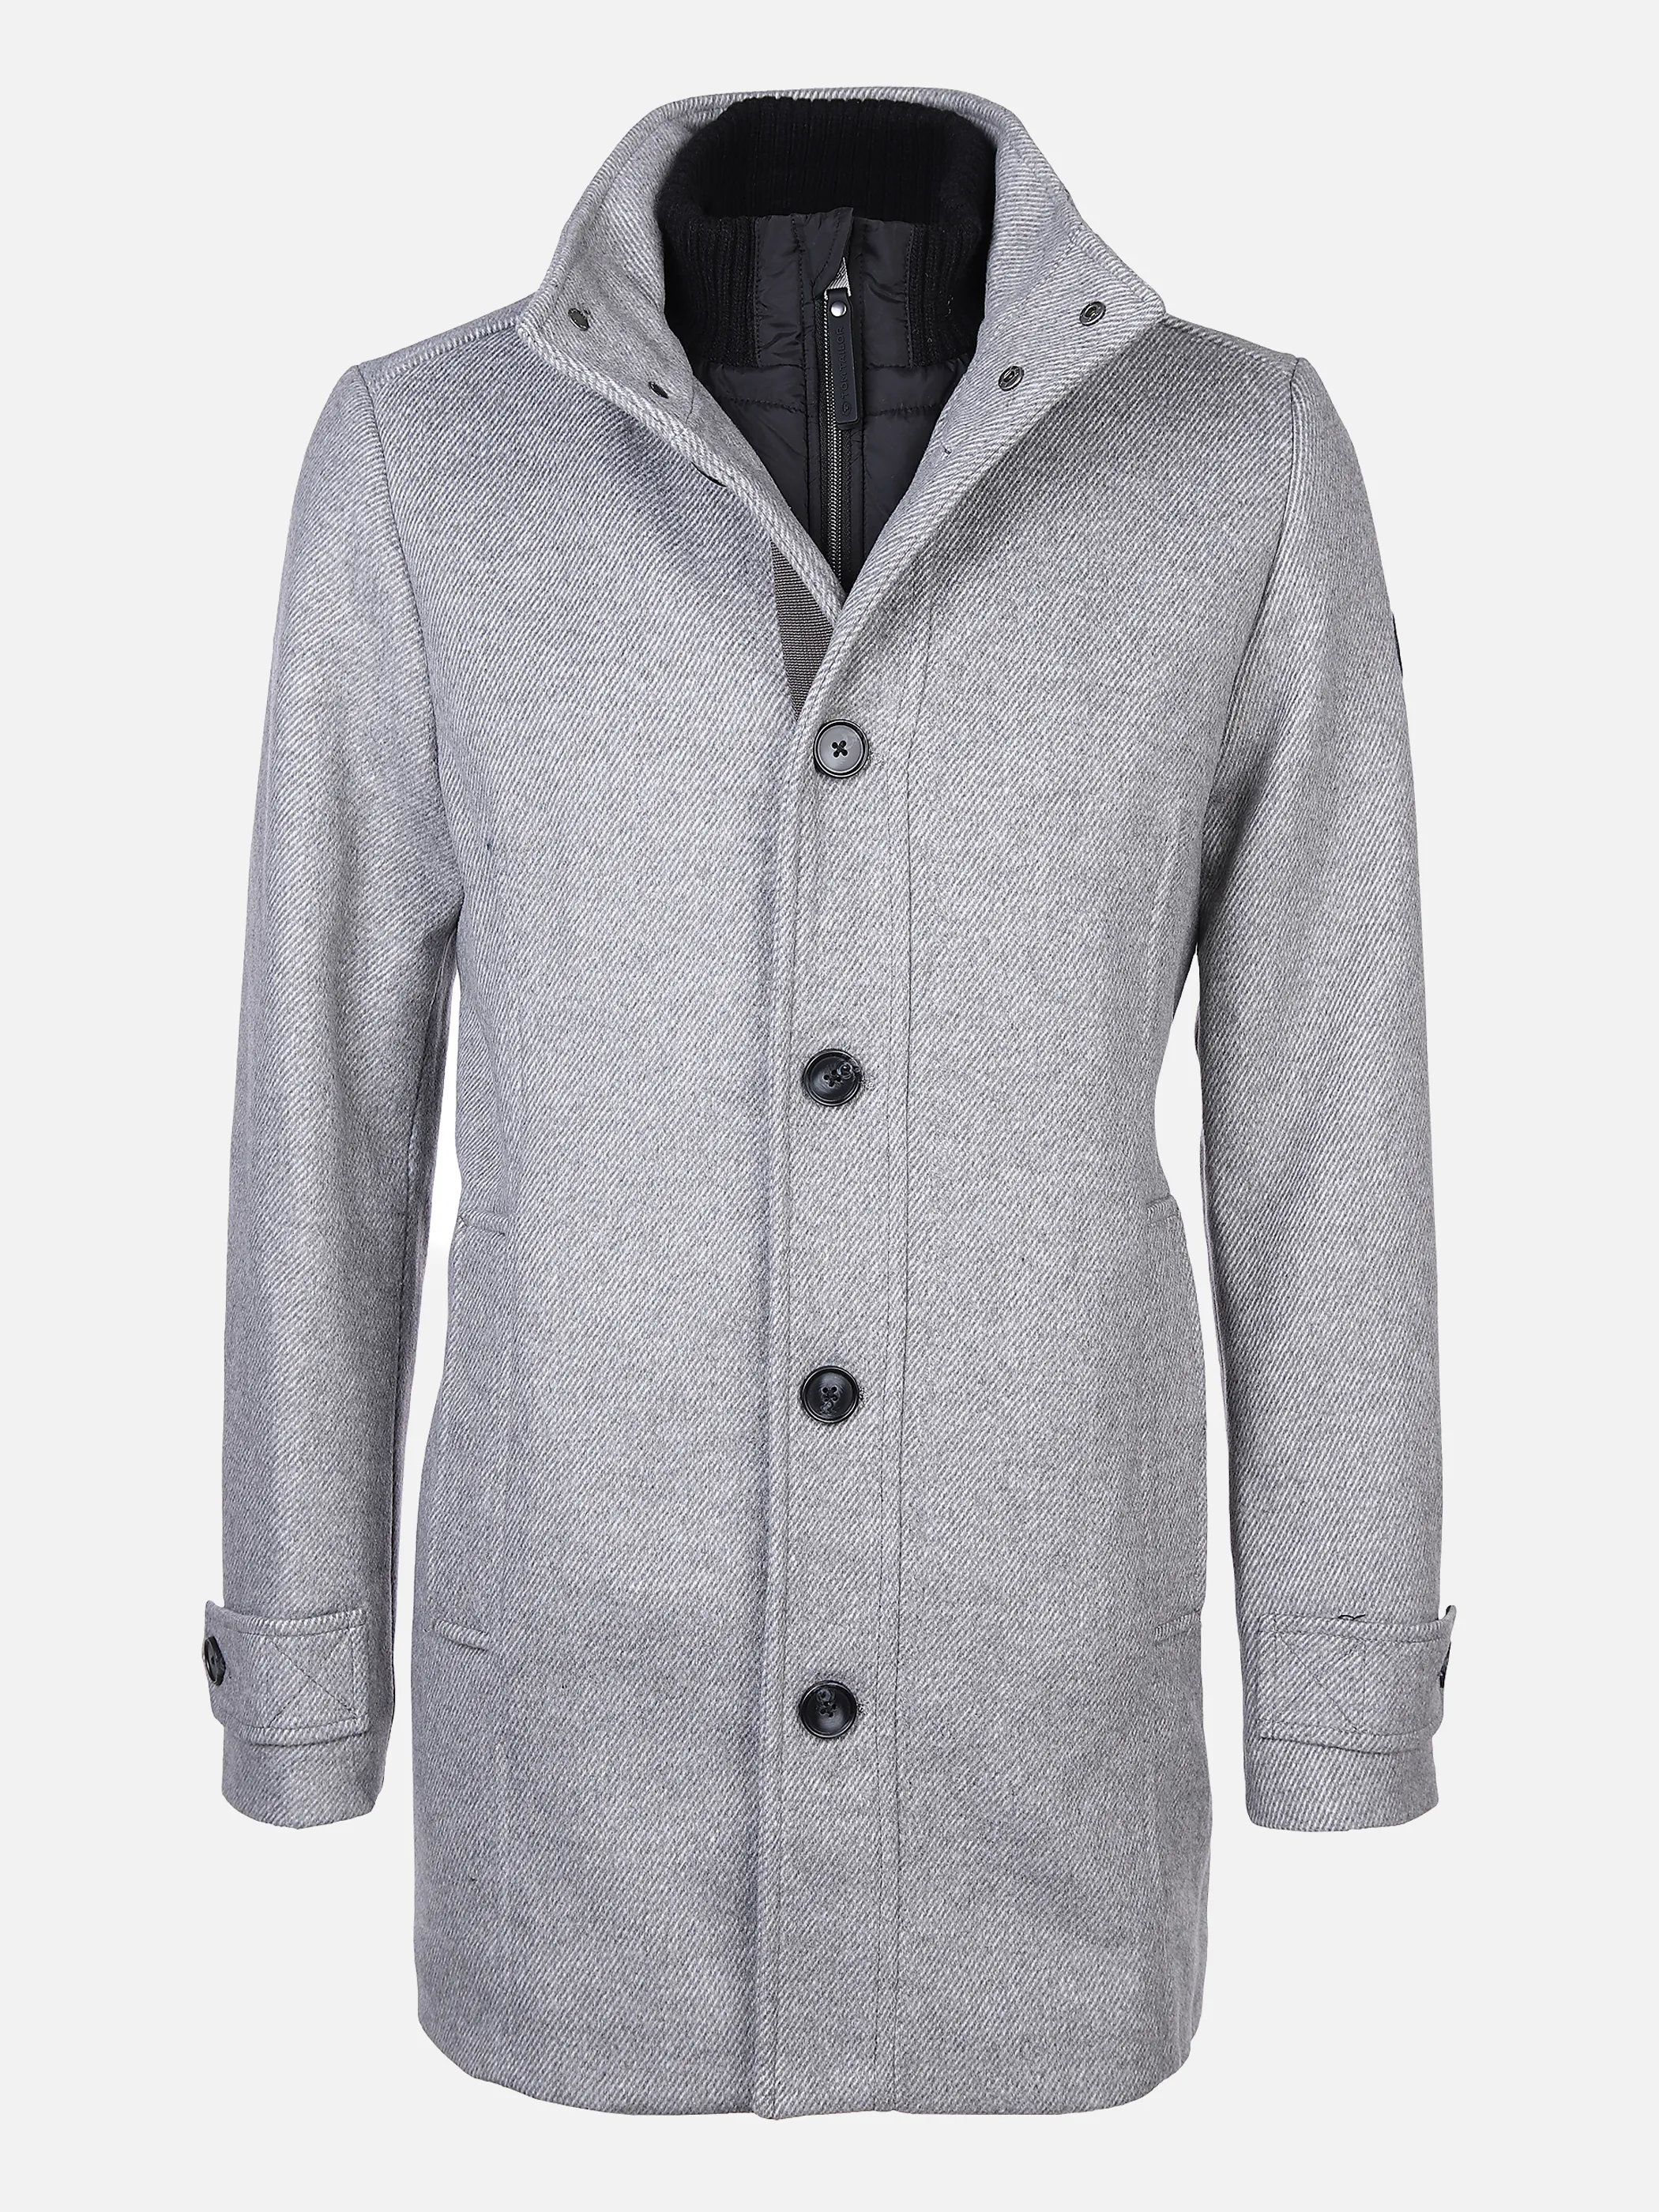 Tom Tailor 1032506 wool coat 2 in 1 Grau 869542 30507 1